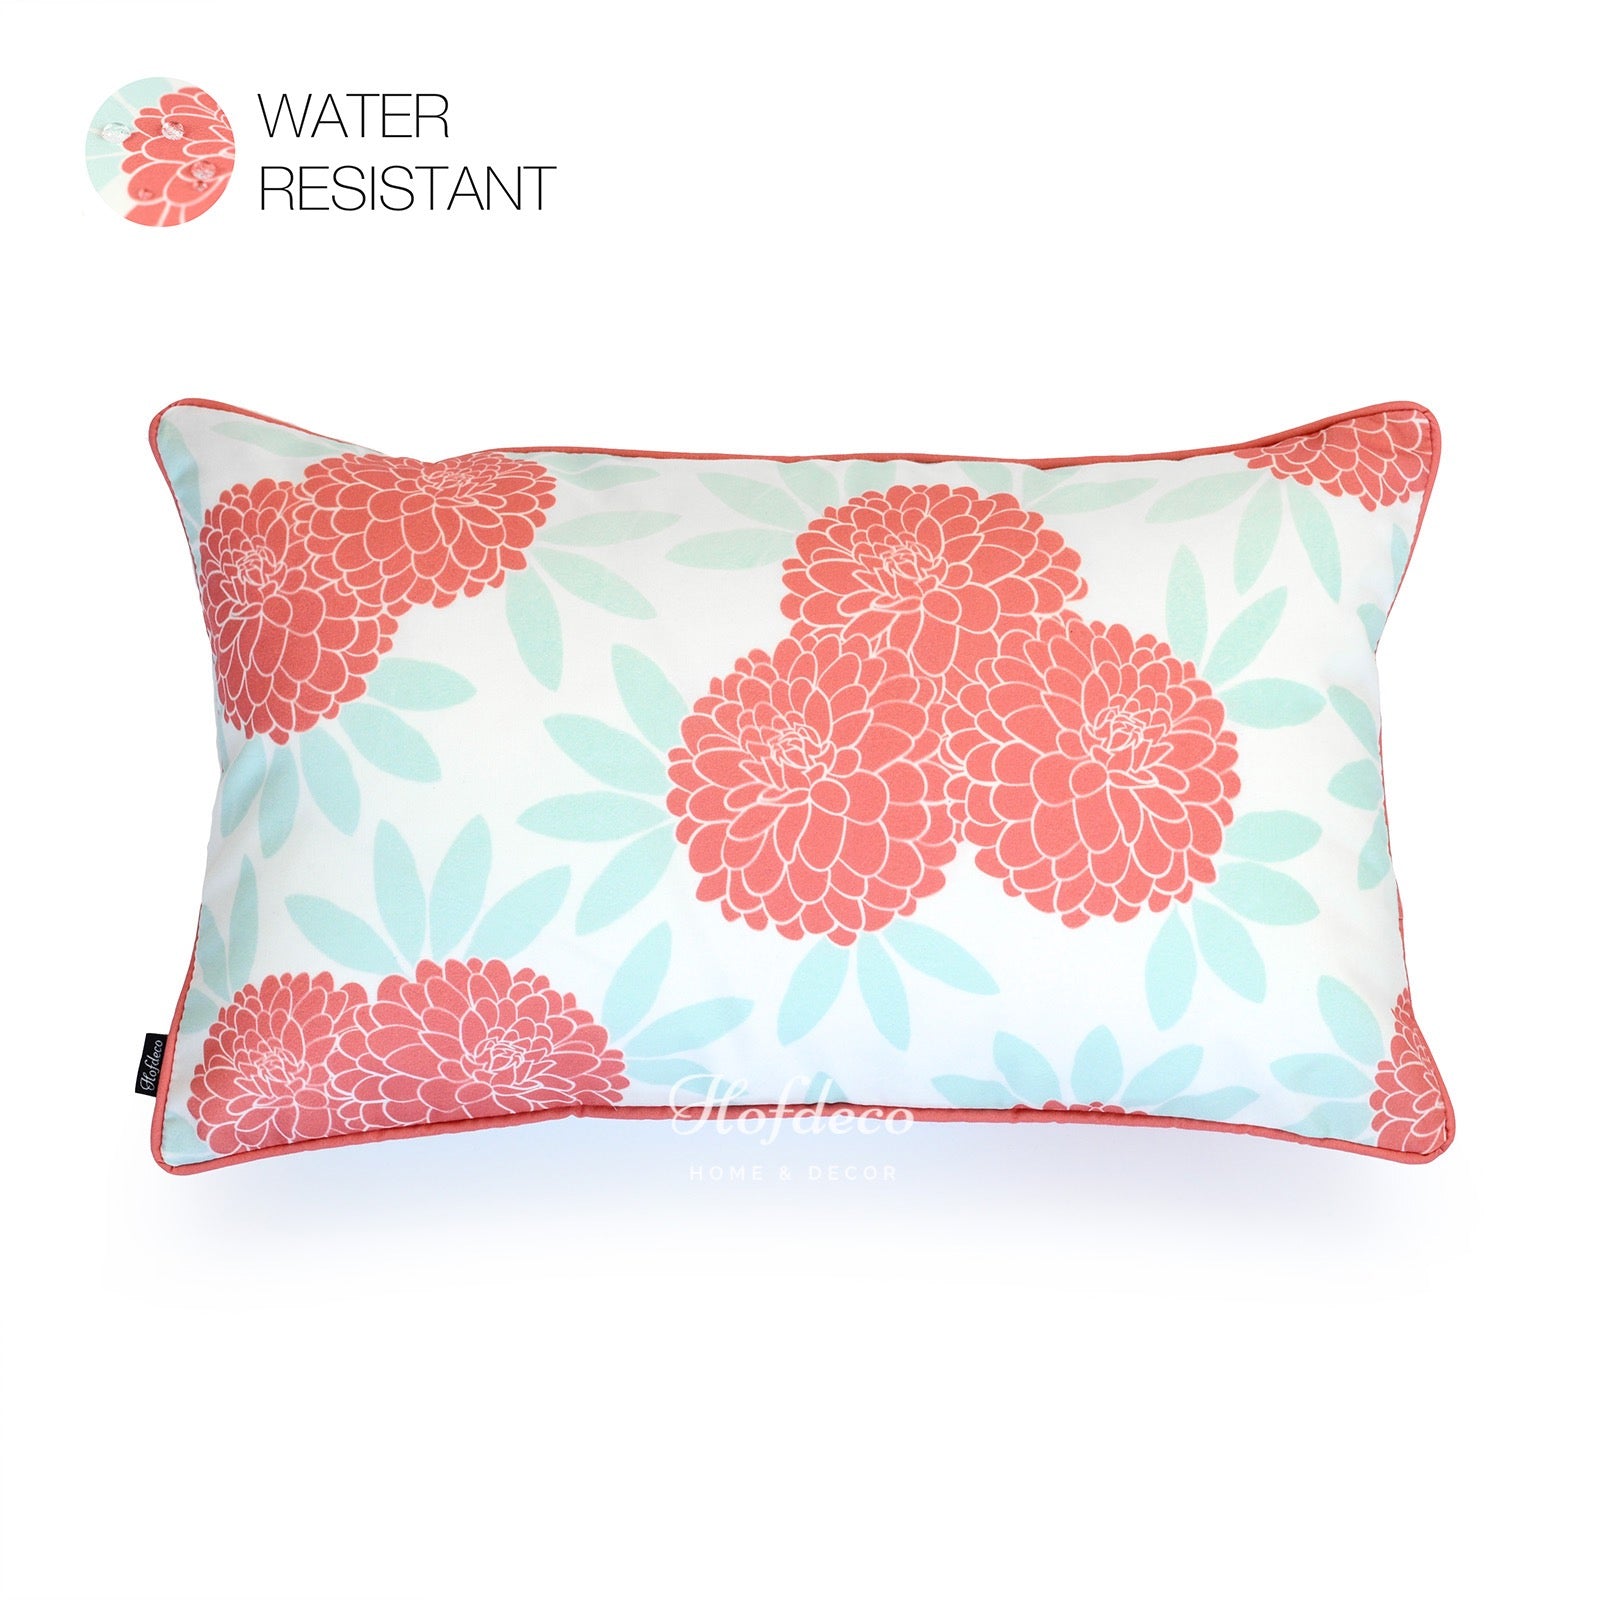 Chinoiserie Floral Outdoor Lumbar Pillow Cover, Aqua Pink, 12"x20"